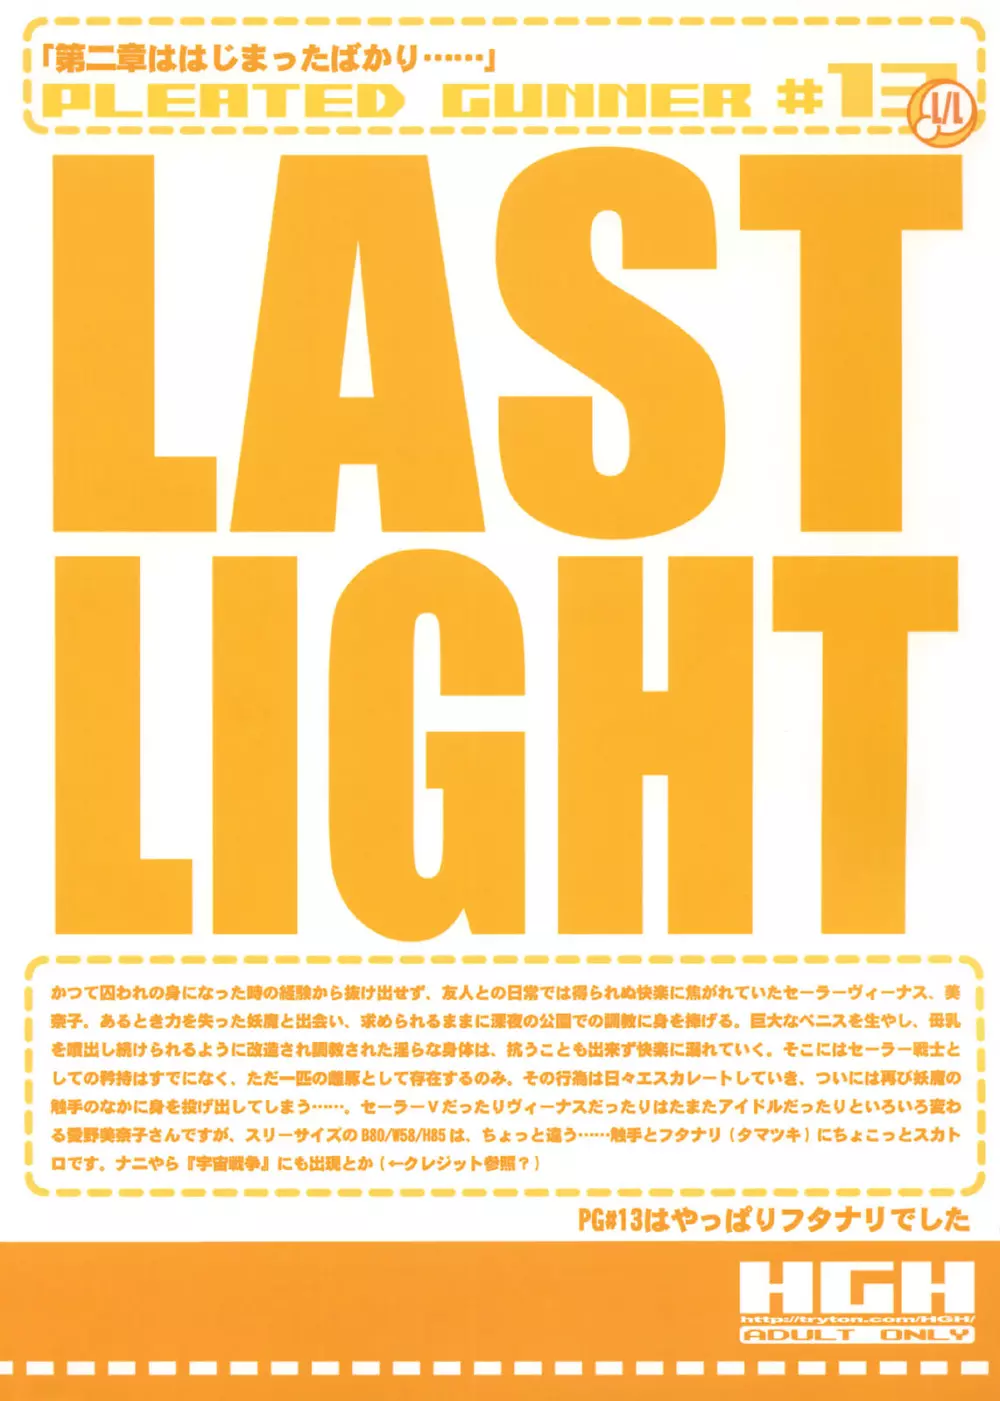 HGH - Last Light Page.2